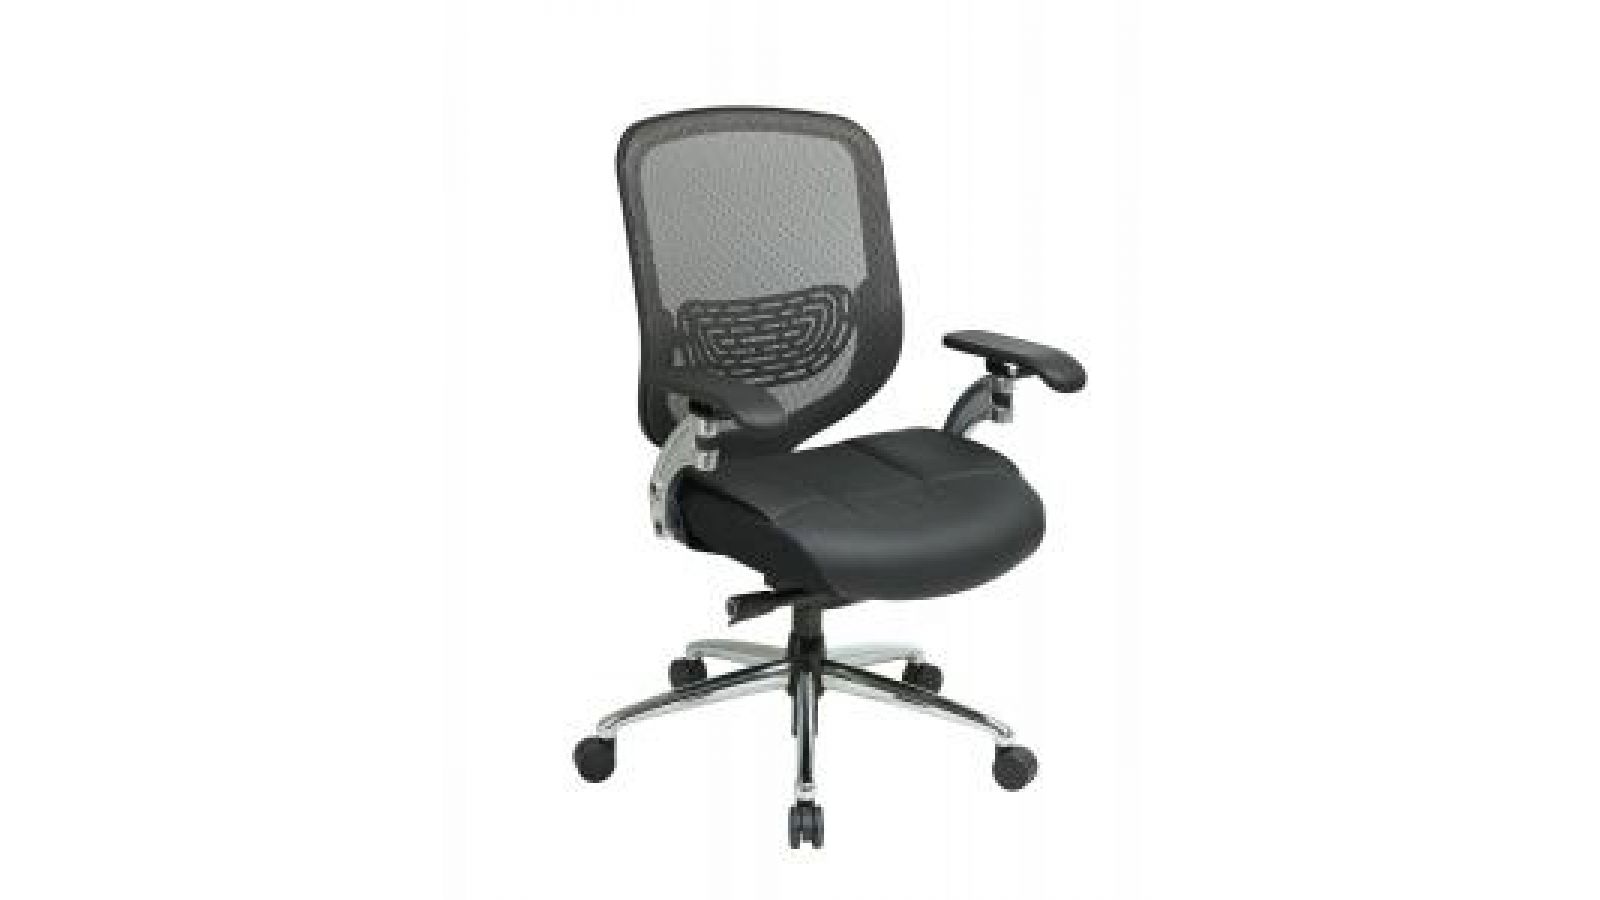 SPACE 829 Series Executive High Back Chair